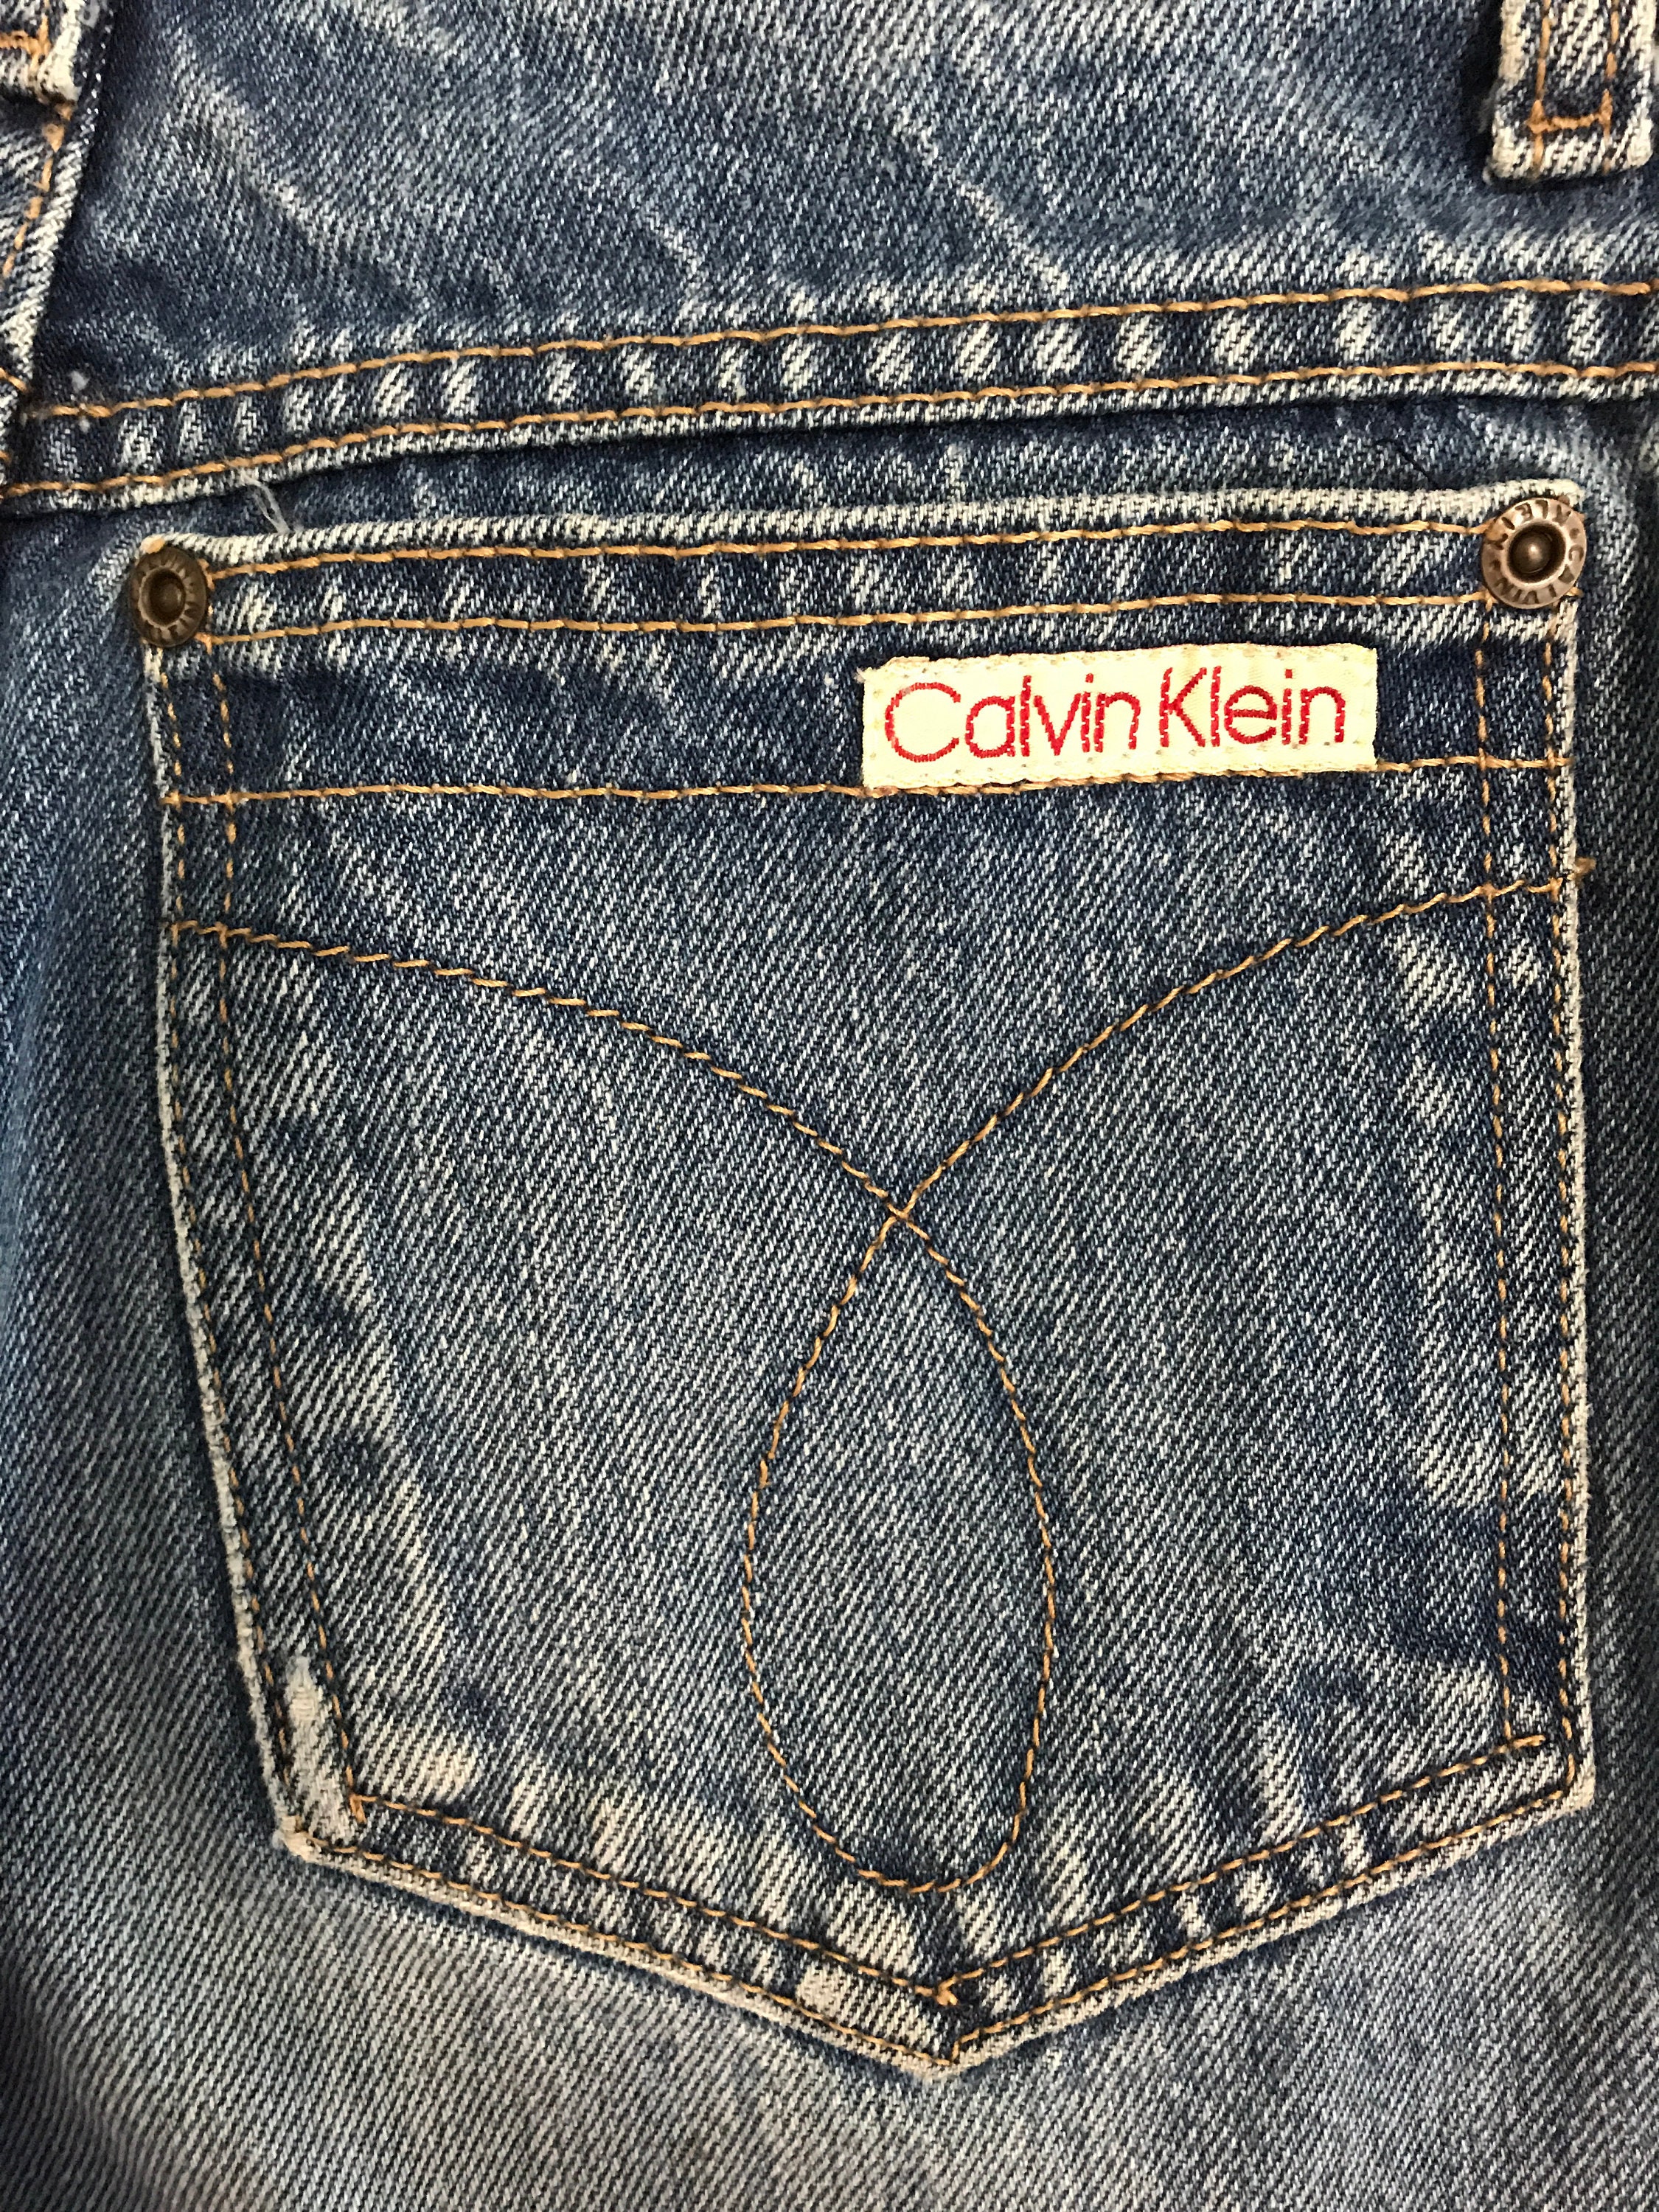 80s Highest Waist Calvin Klein Jeans Straight Leg Cut off - Etsy